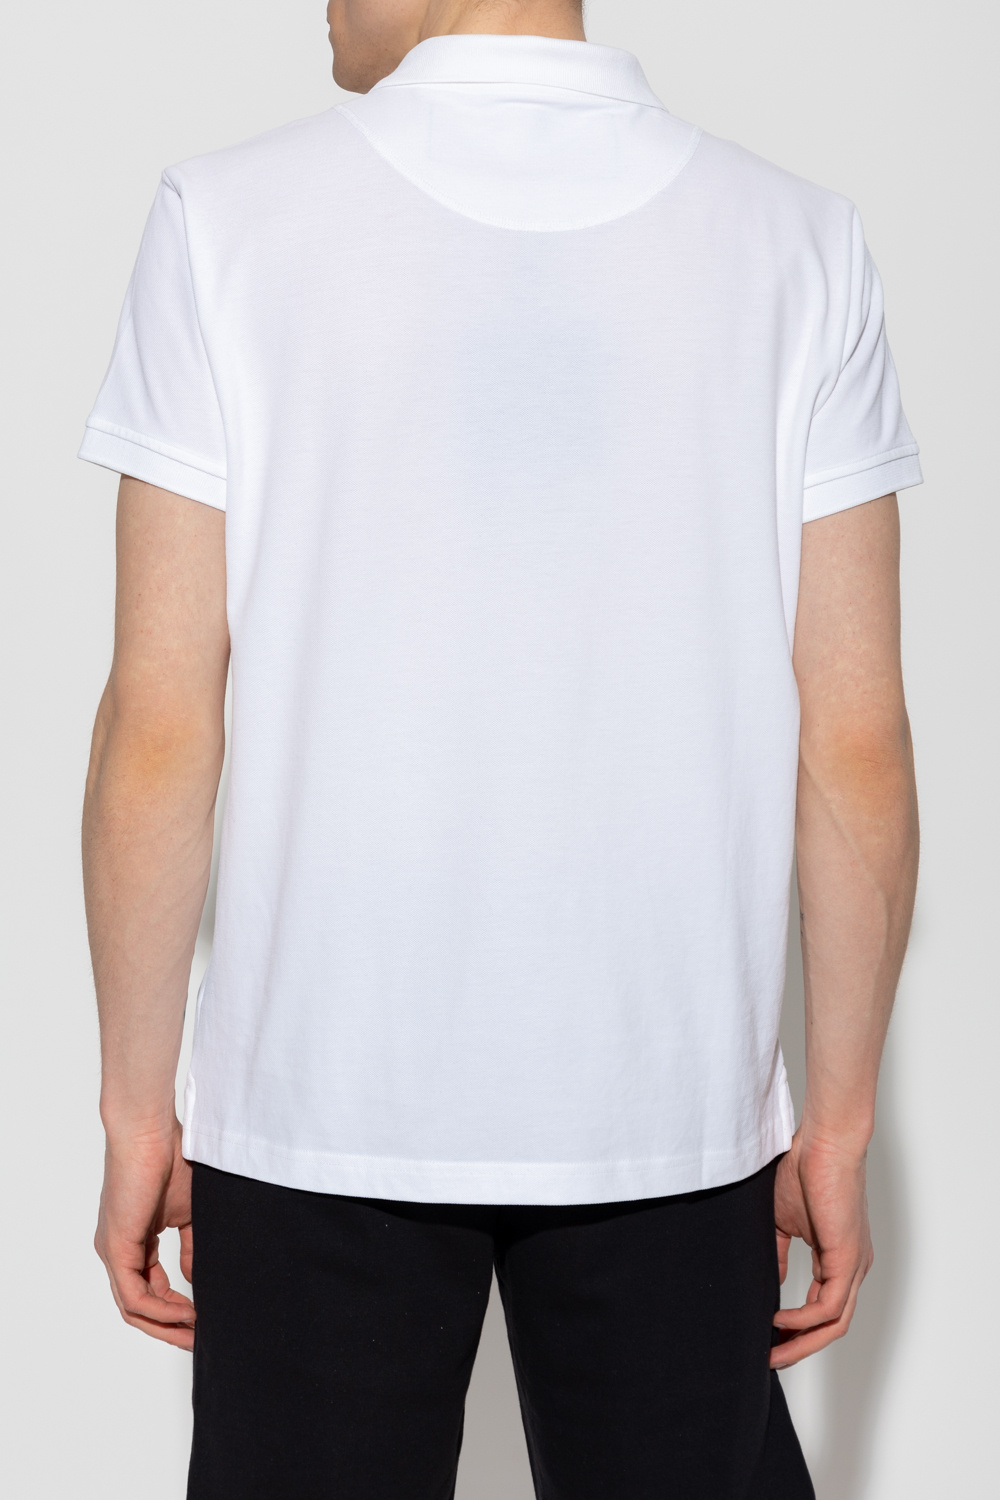 Moose Knuckles Logo Detailed Crewneck T-shirt in White for Men